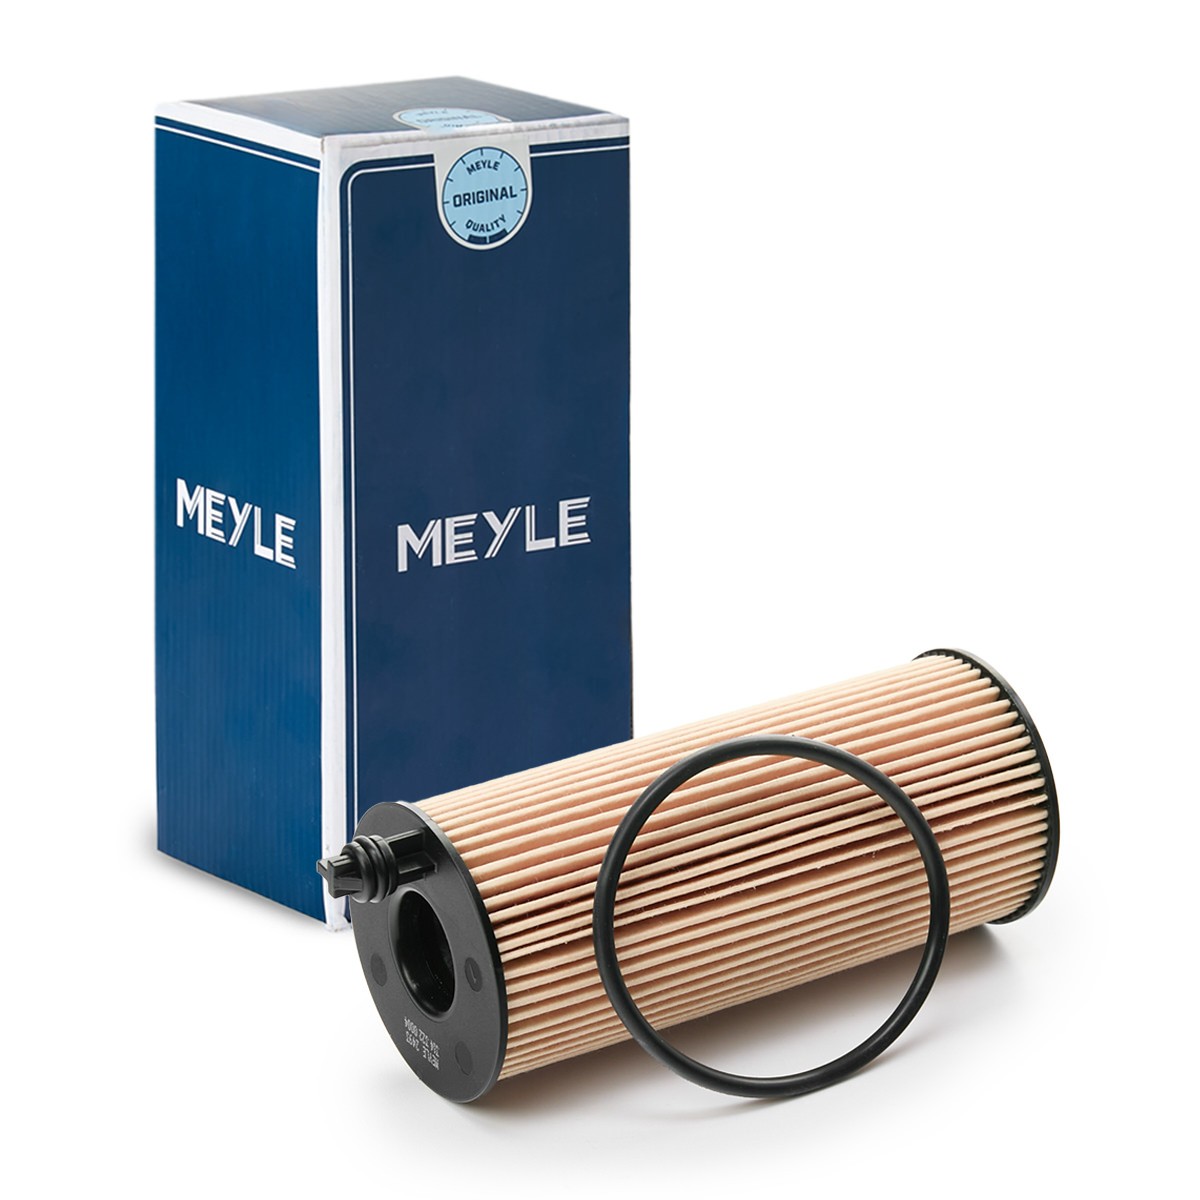 MEYLE 3143220004 Engine oil filter with gaskets/seals, Filter Insert